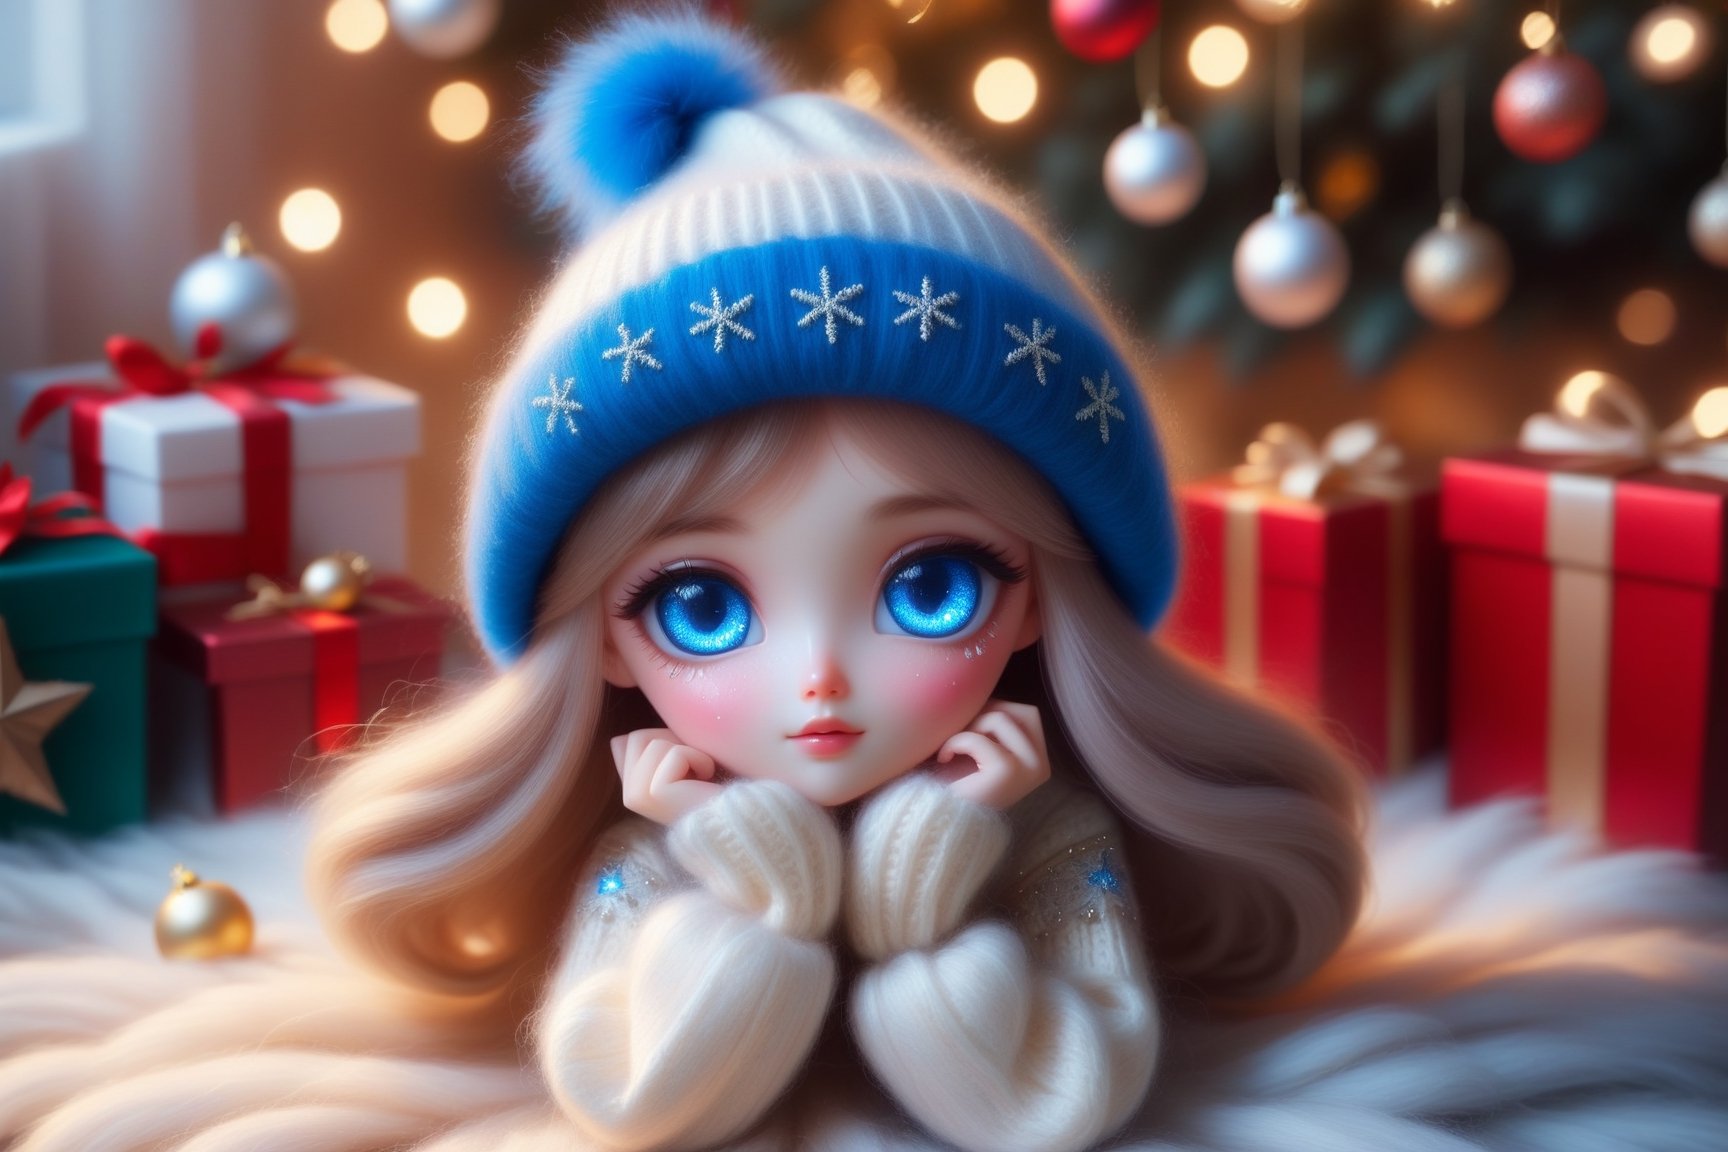 Magic fairy, super realistic electric blue eyes, tears falling from the eyes, Christmas mood, wool cap, furry sweatshirt, elegant transparent skirt, legs crossed